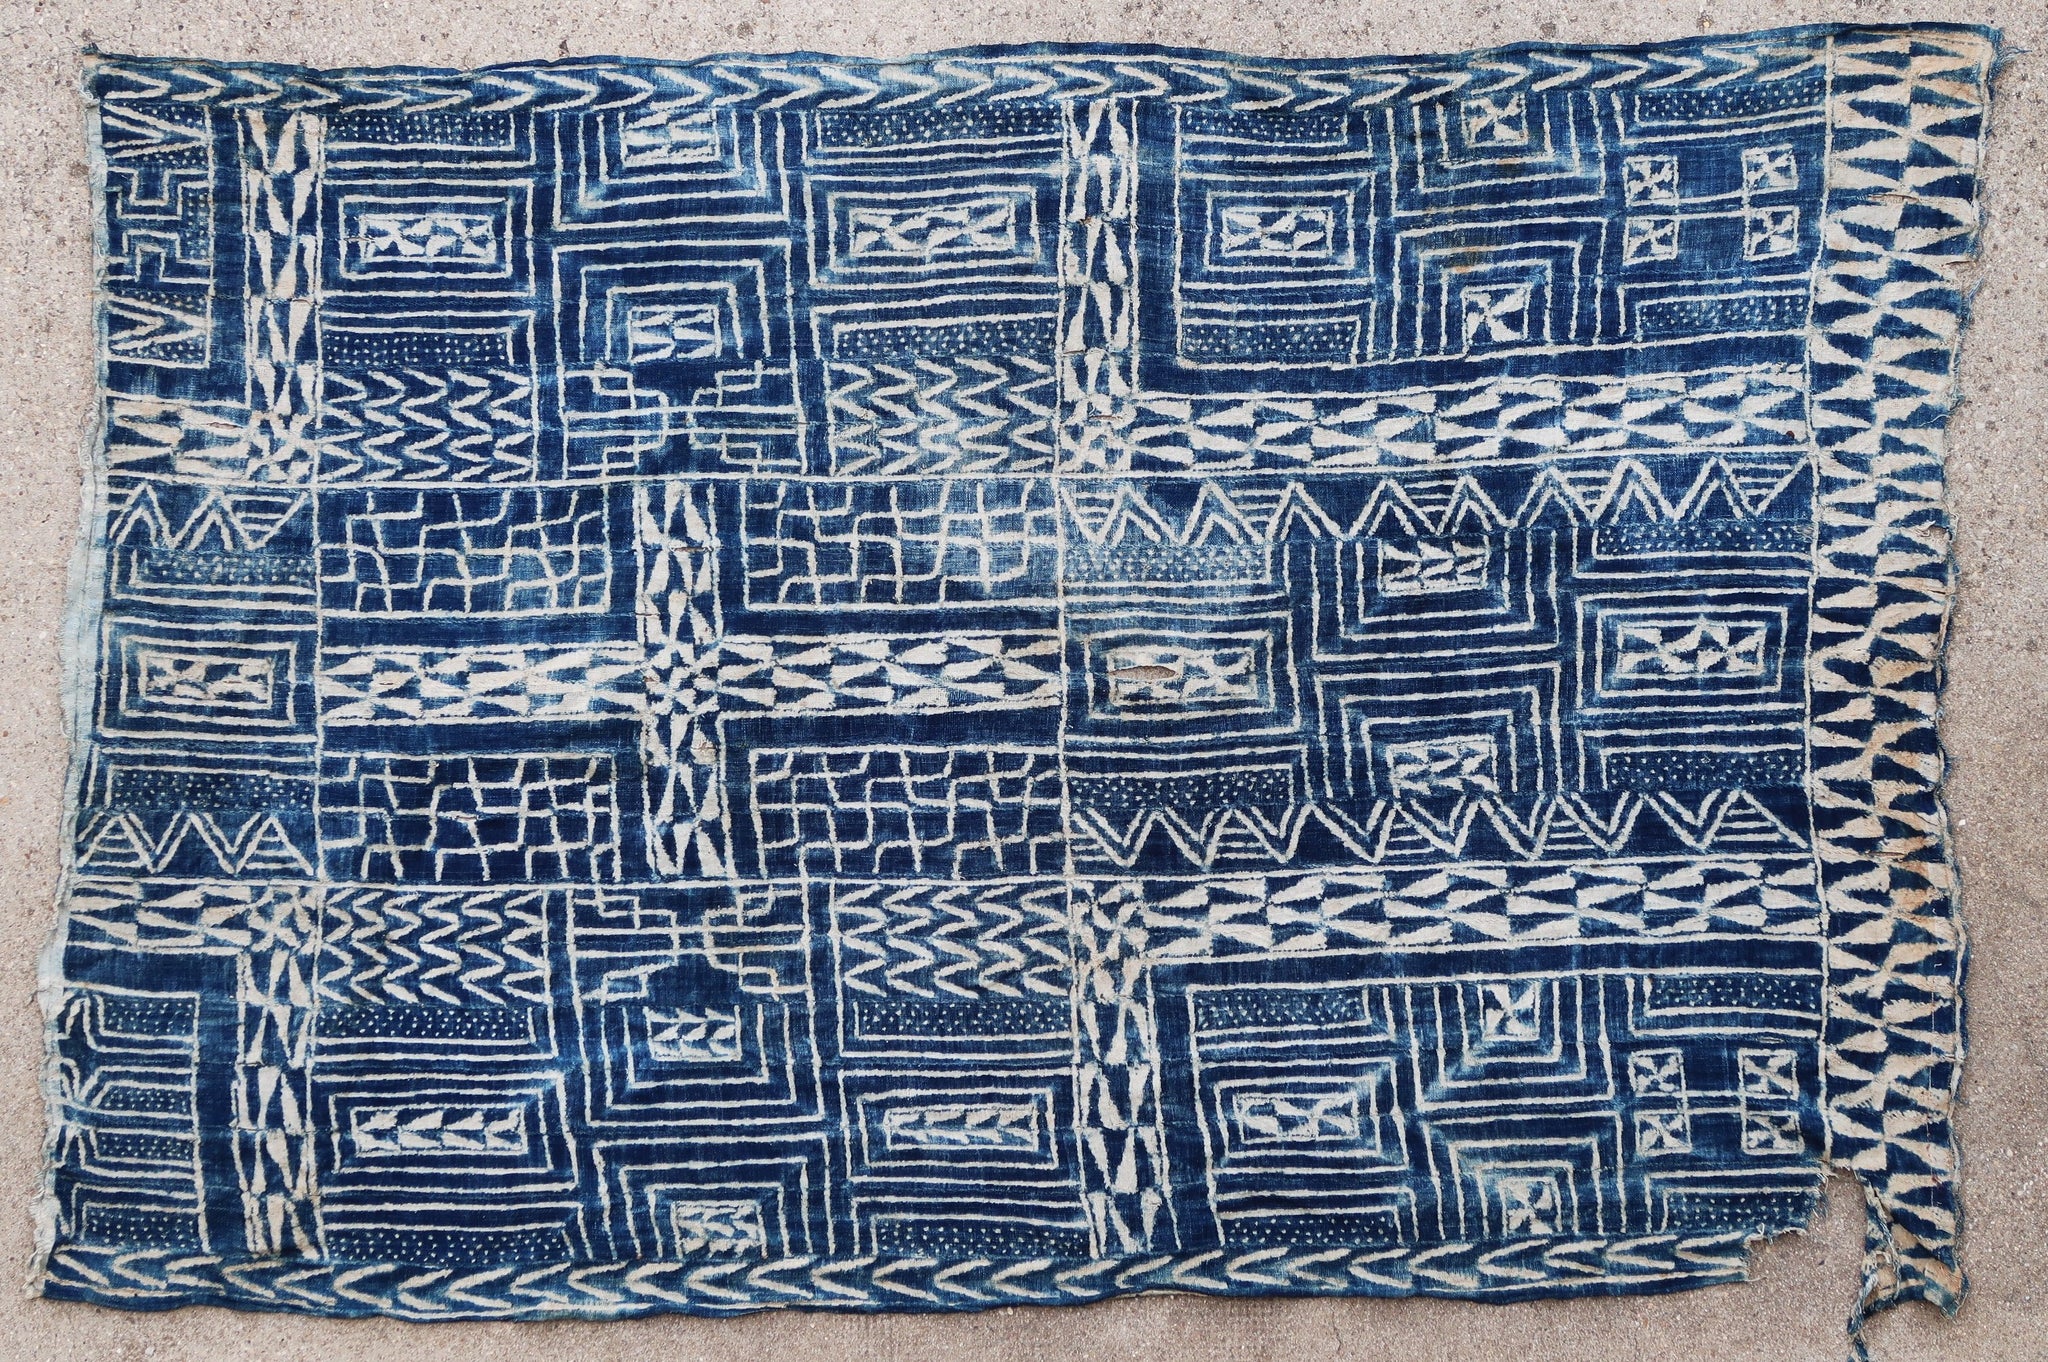 Cameroonian textile Bamileke